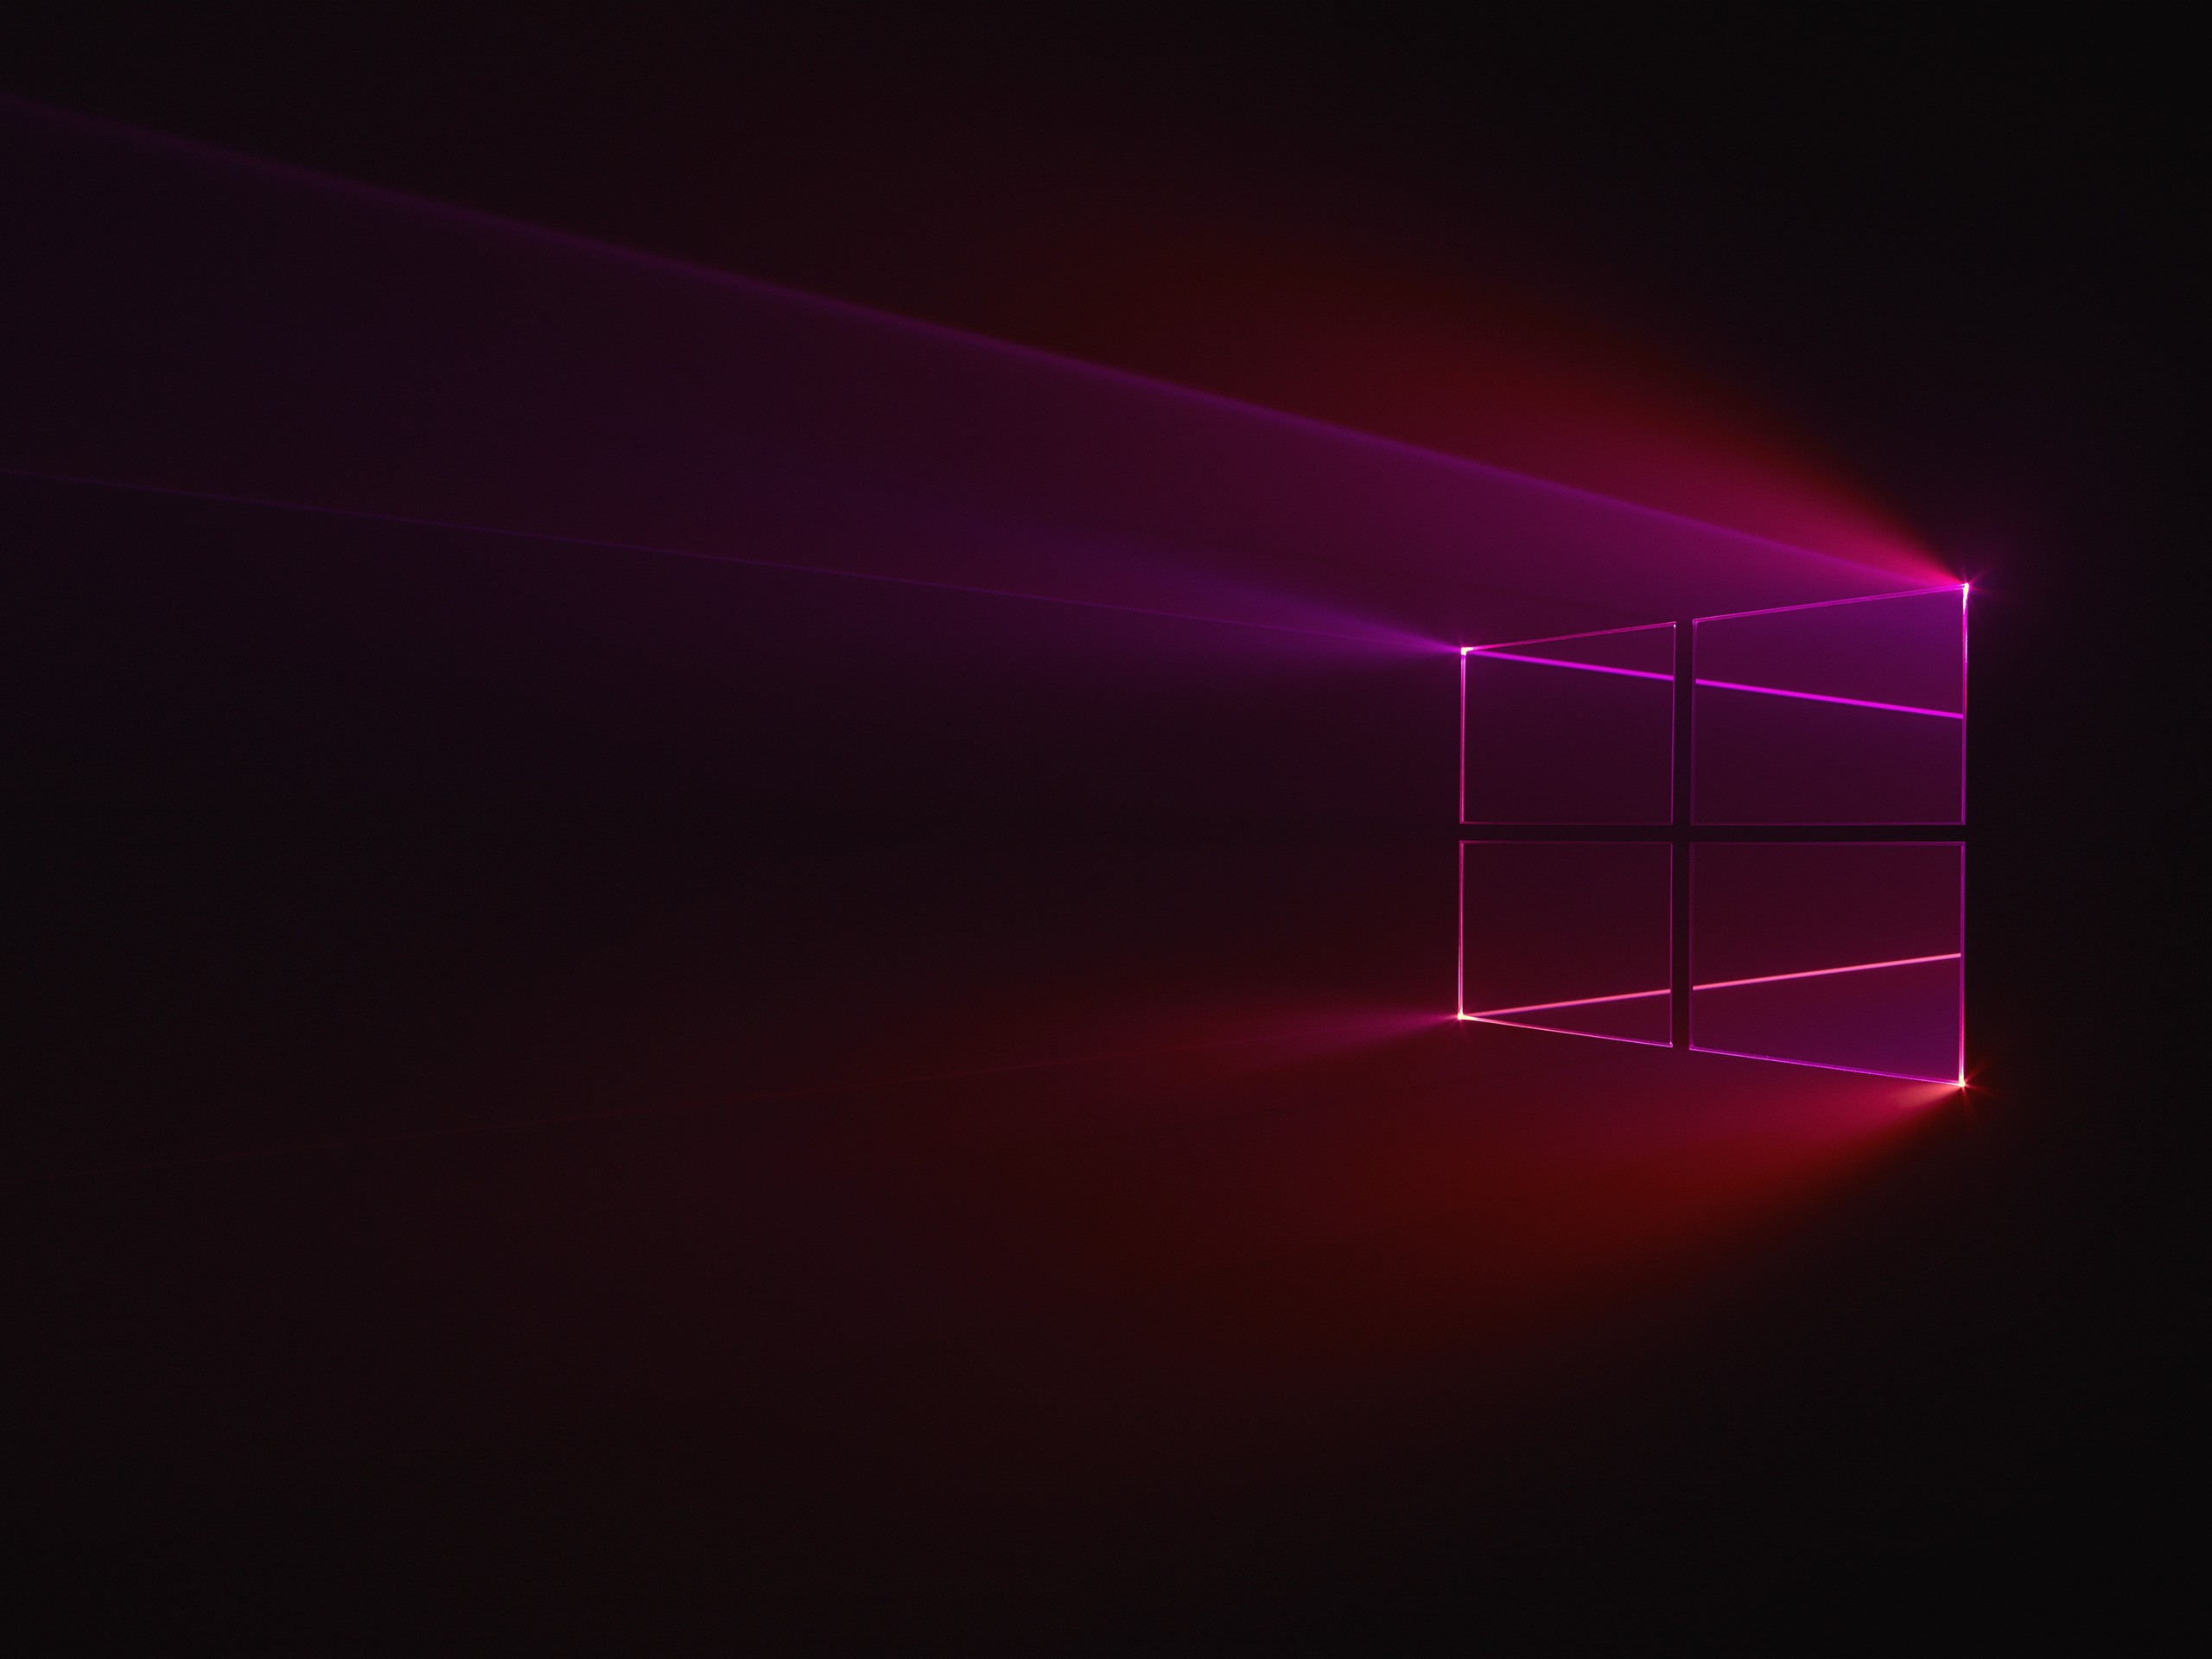 General 2560x1920 Windows 10 abstract GMUNK Microsoft Windows simple background logo digital art night mode